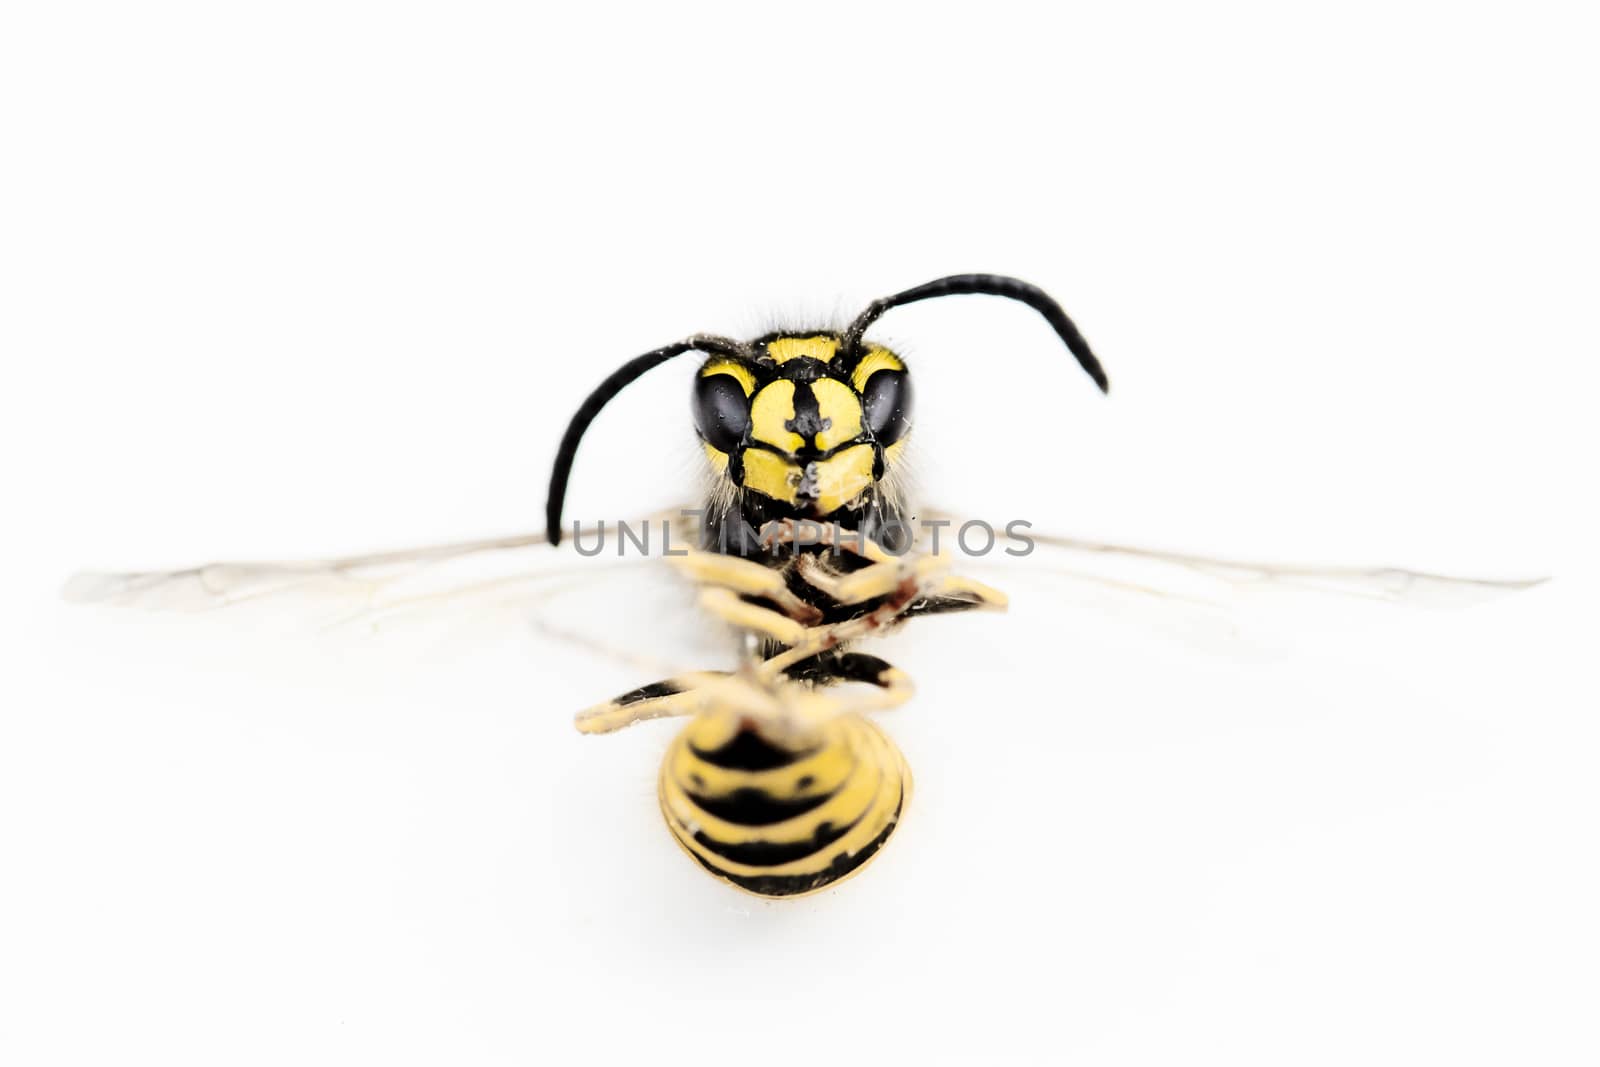 Macro photograph of a european wasp